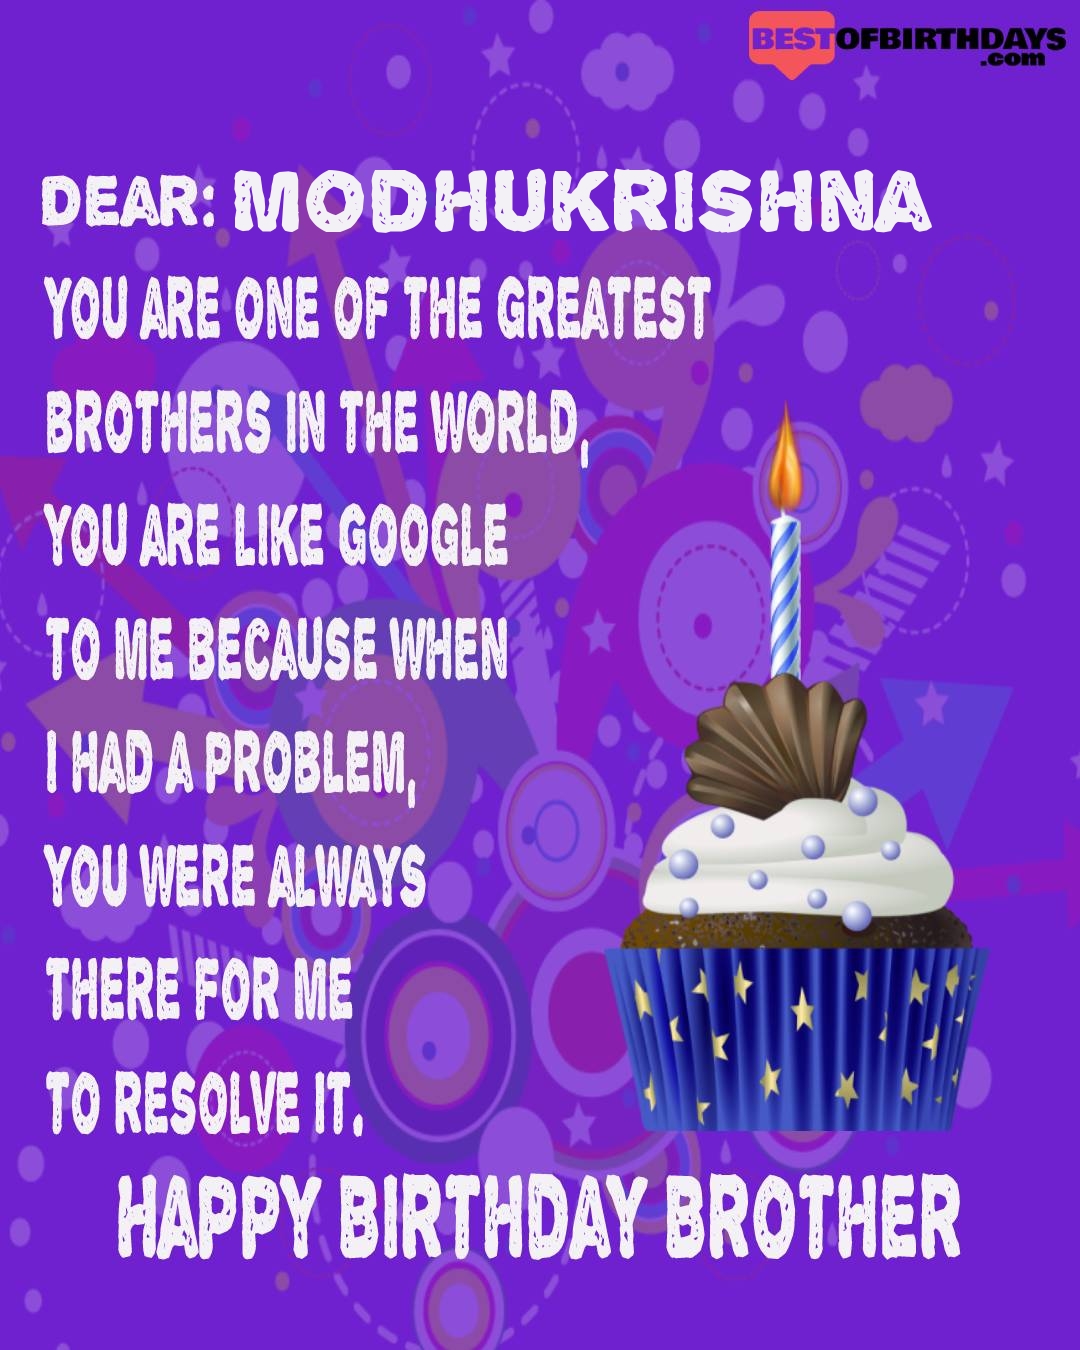 Happy birthday modhukrishna bhai brother bro